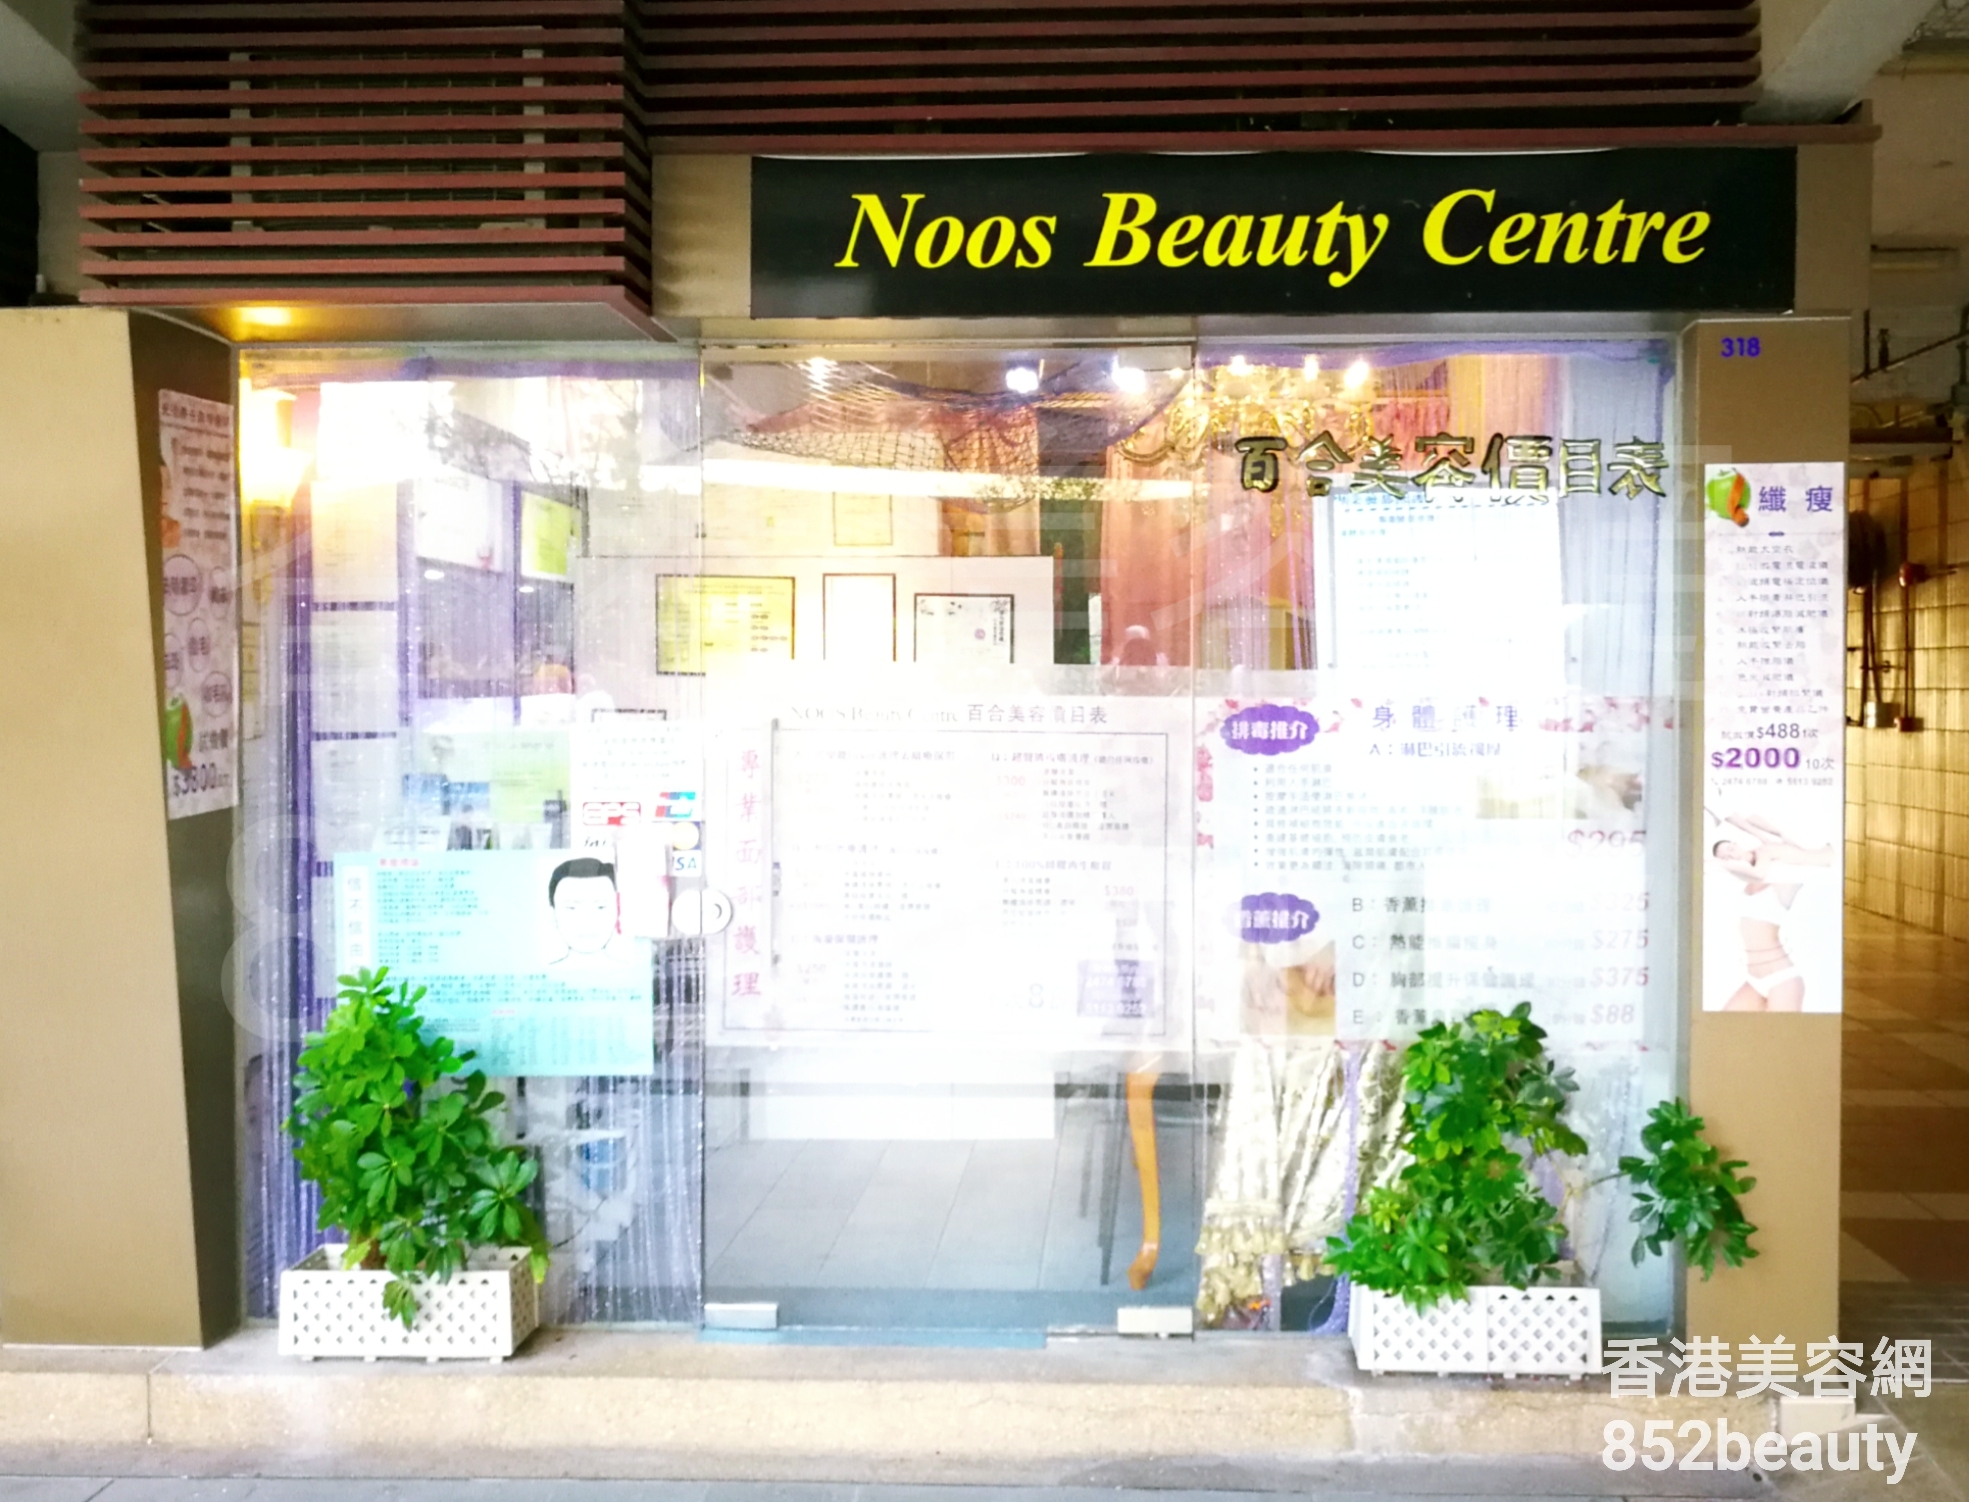 Eyelashes: Noos Beauty Centre